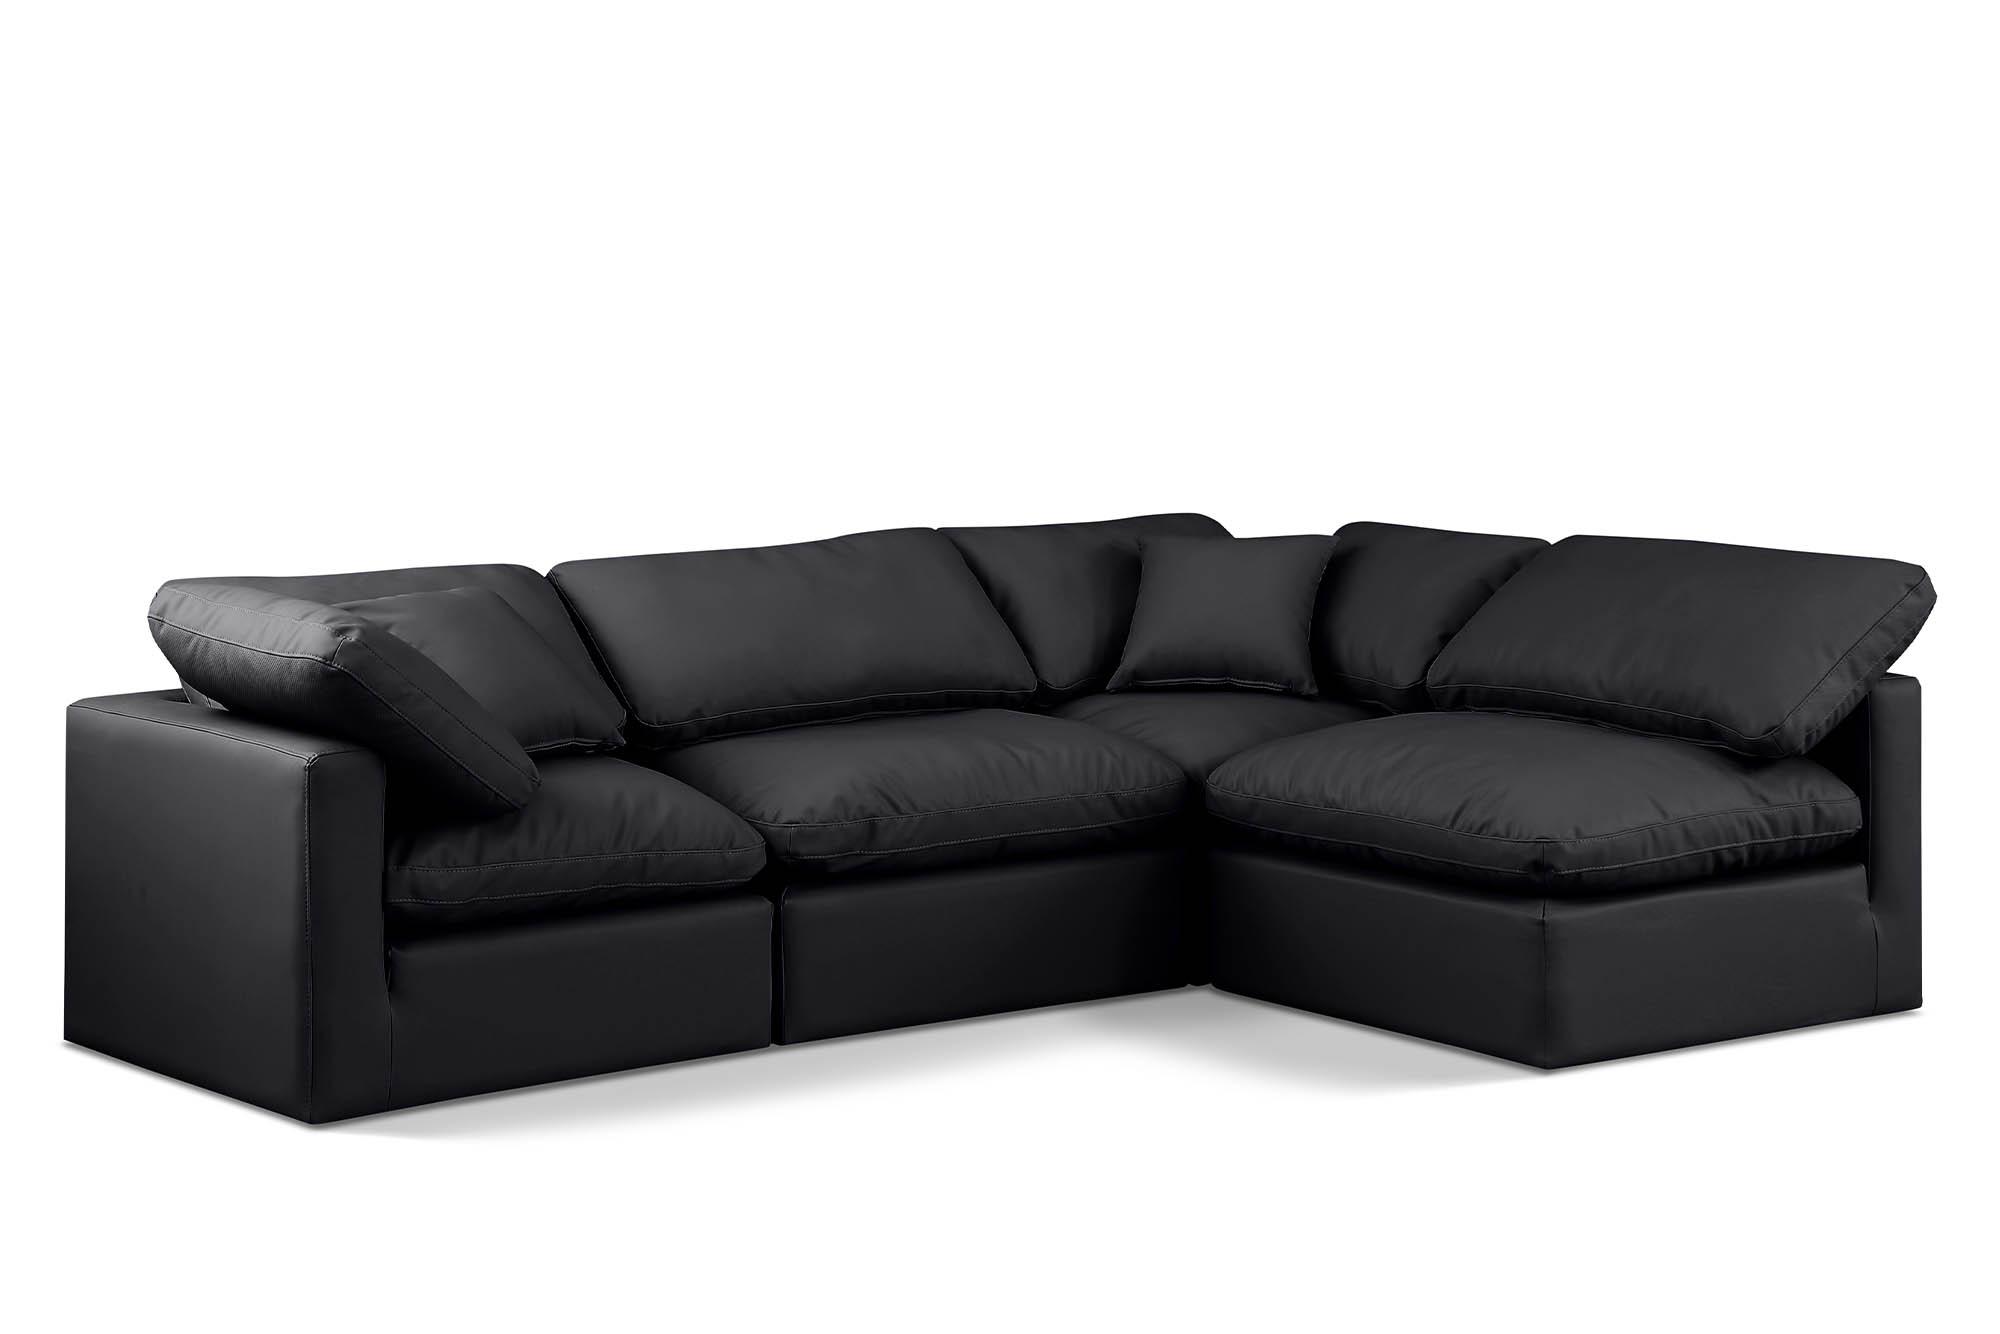 Contemporary, Modern Modular Sectional Sofa INDULGE 146Black-Sec4B 146Black-Sec4B in Black Faux Leather